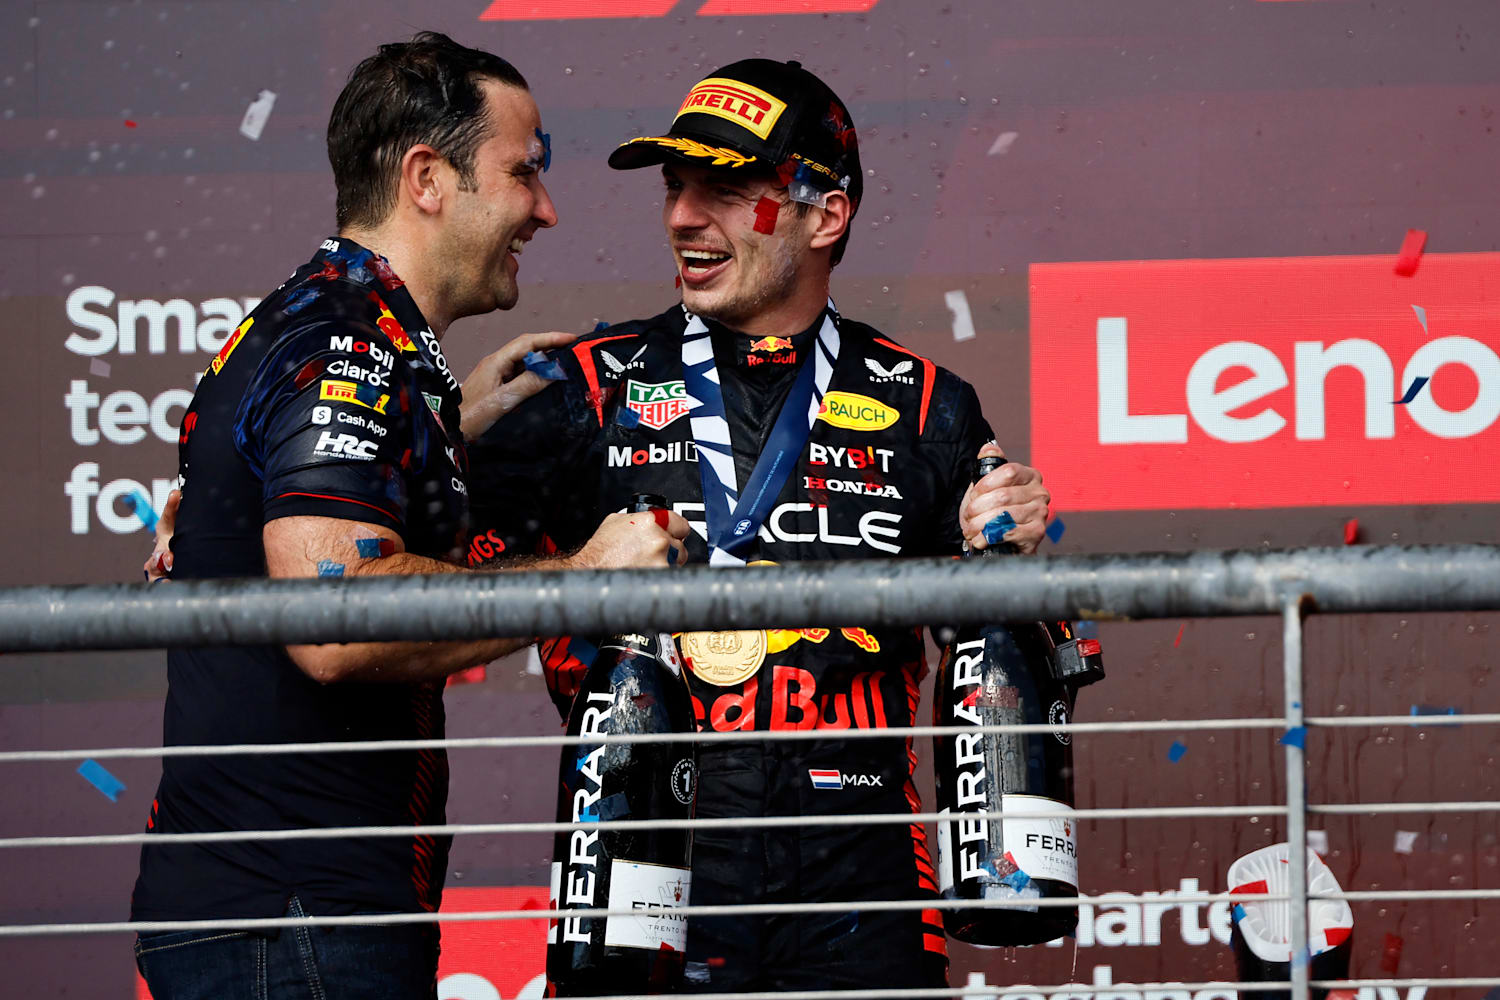 F1: Red Bull's Max Verstappen Wins US Grand Prix Sprint Race